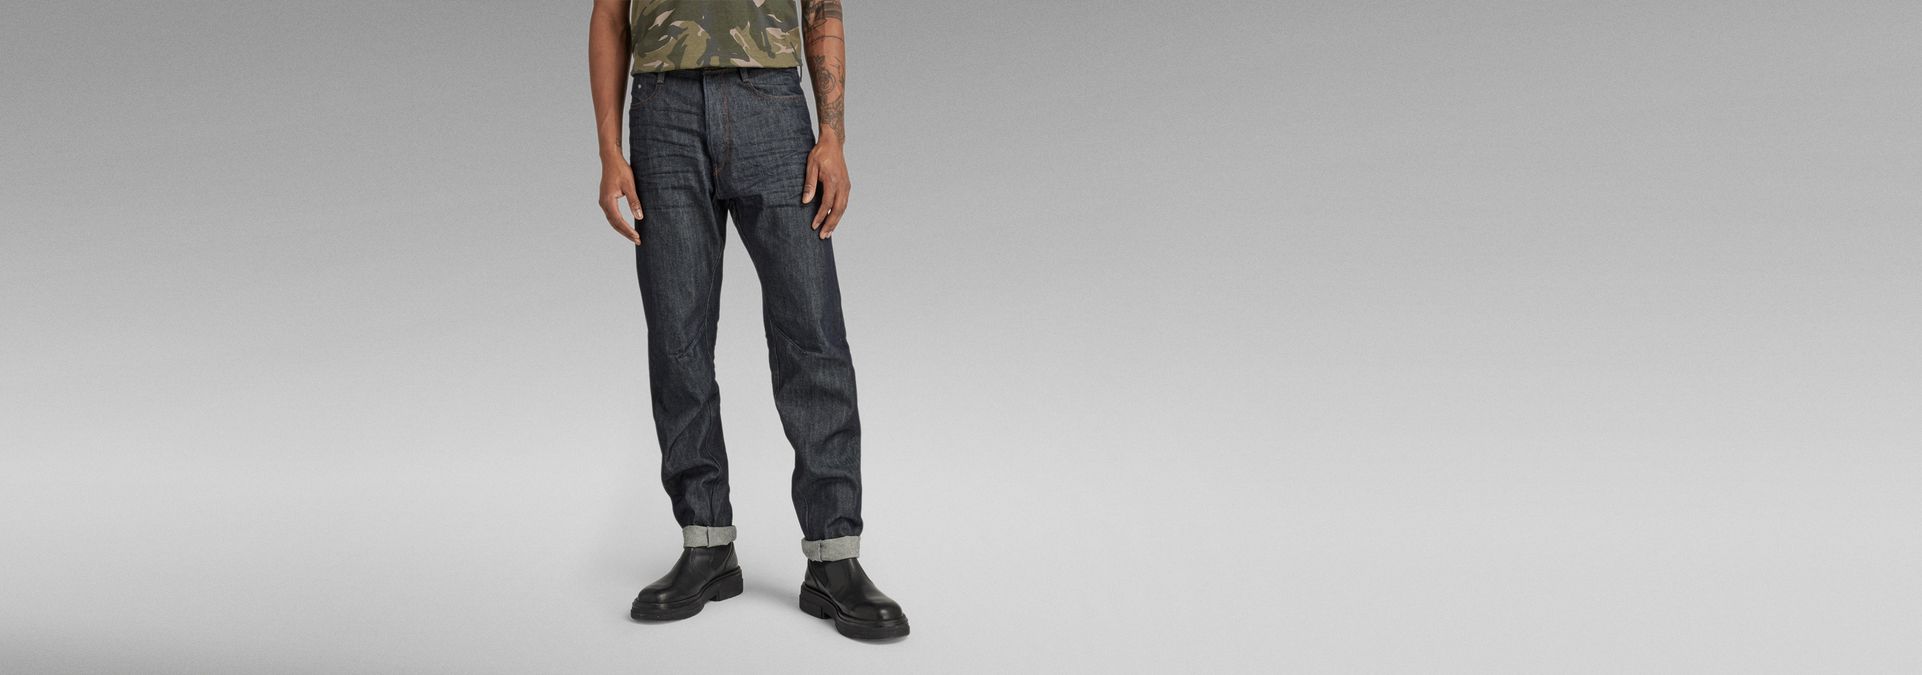 Gstar Arc 3D Sport Tapered Grey Rinn Trainer Jeans